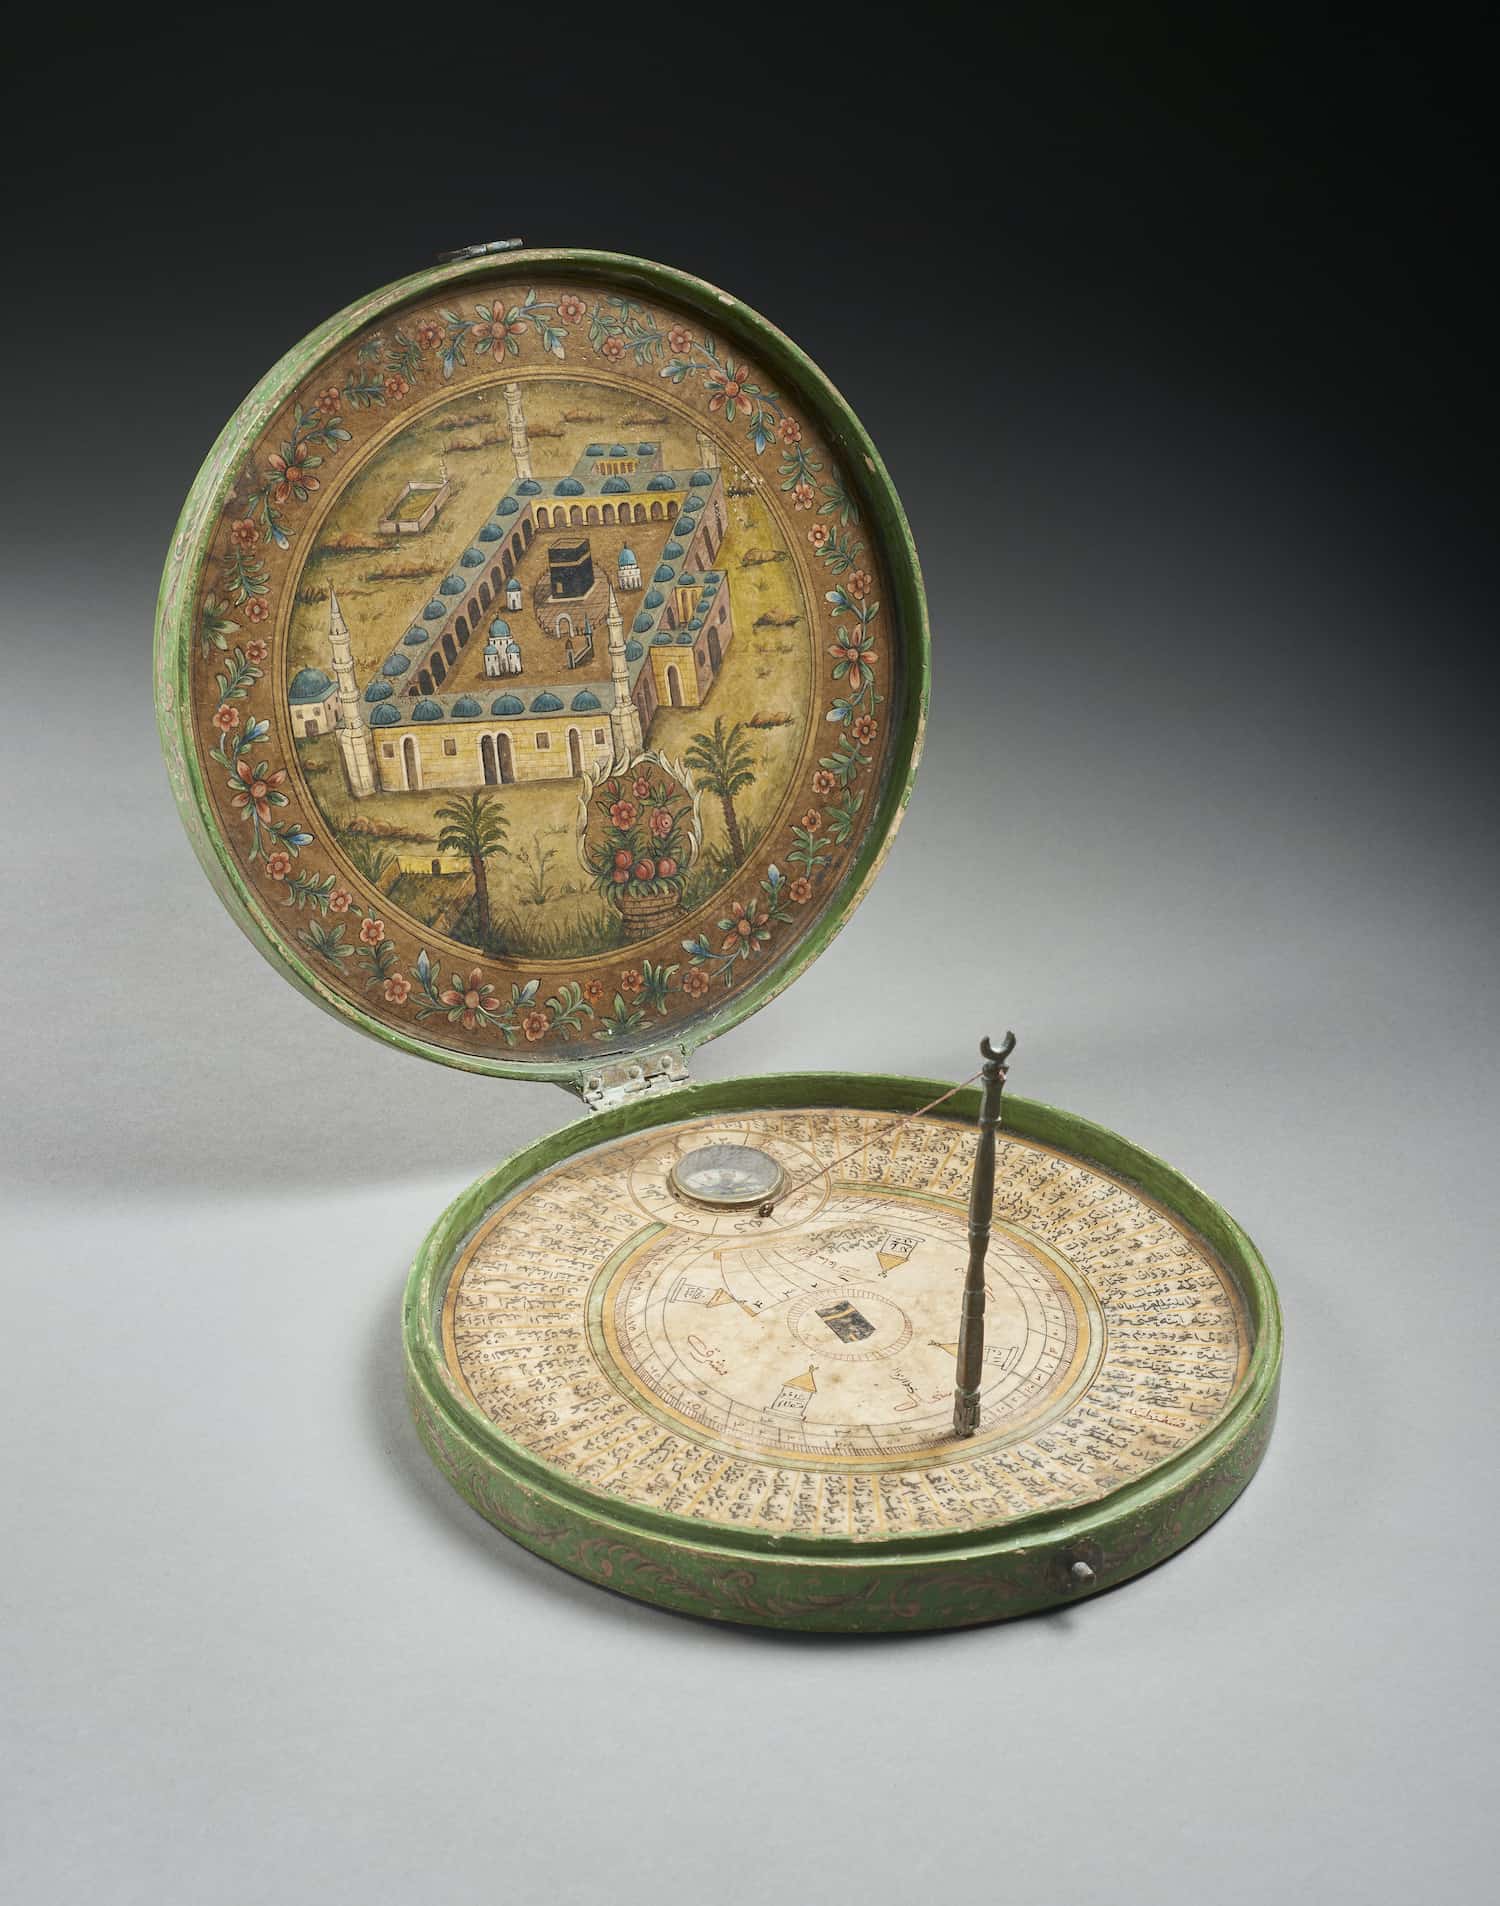 Ottoman qibla indicator